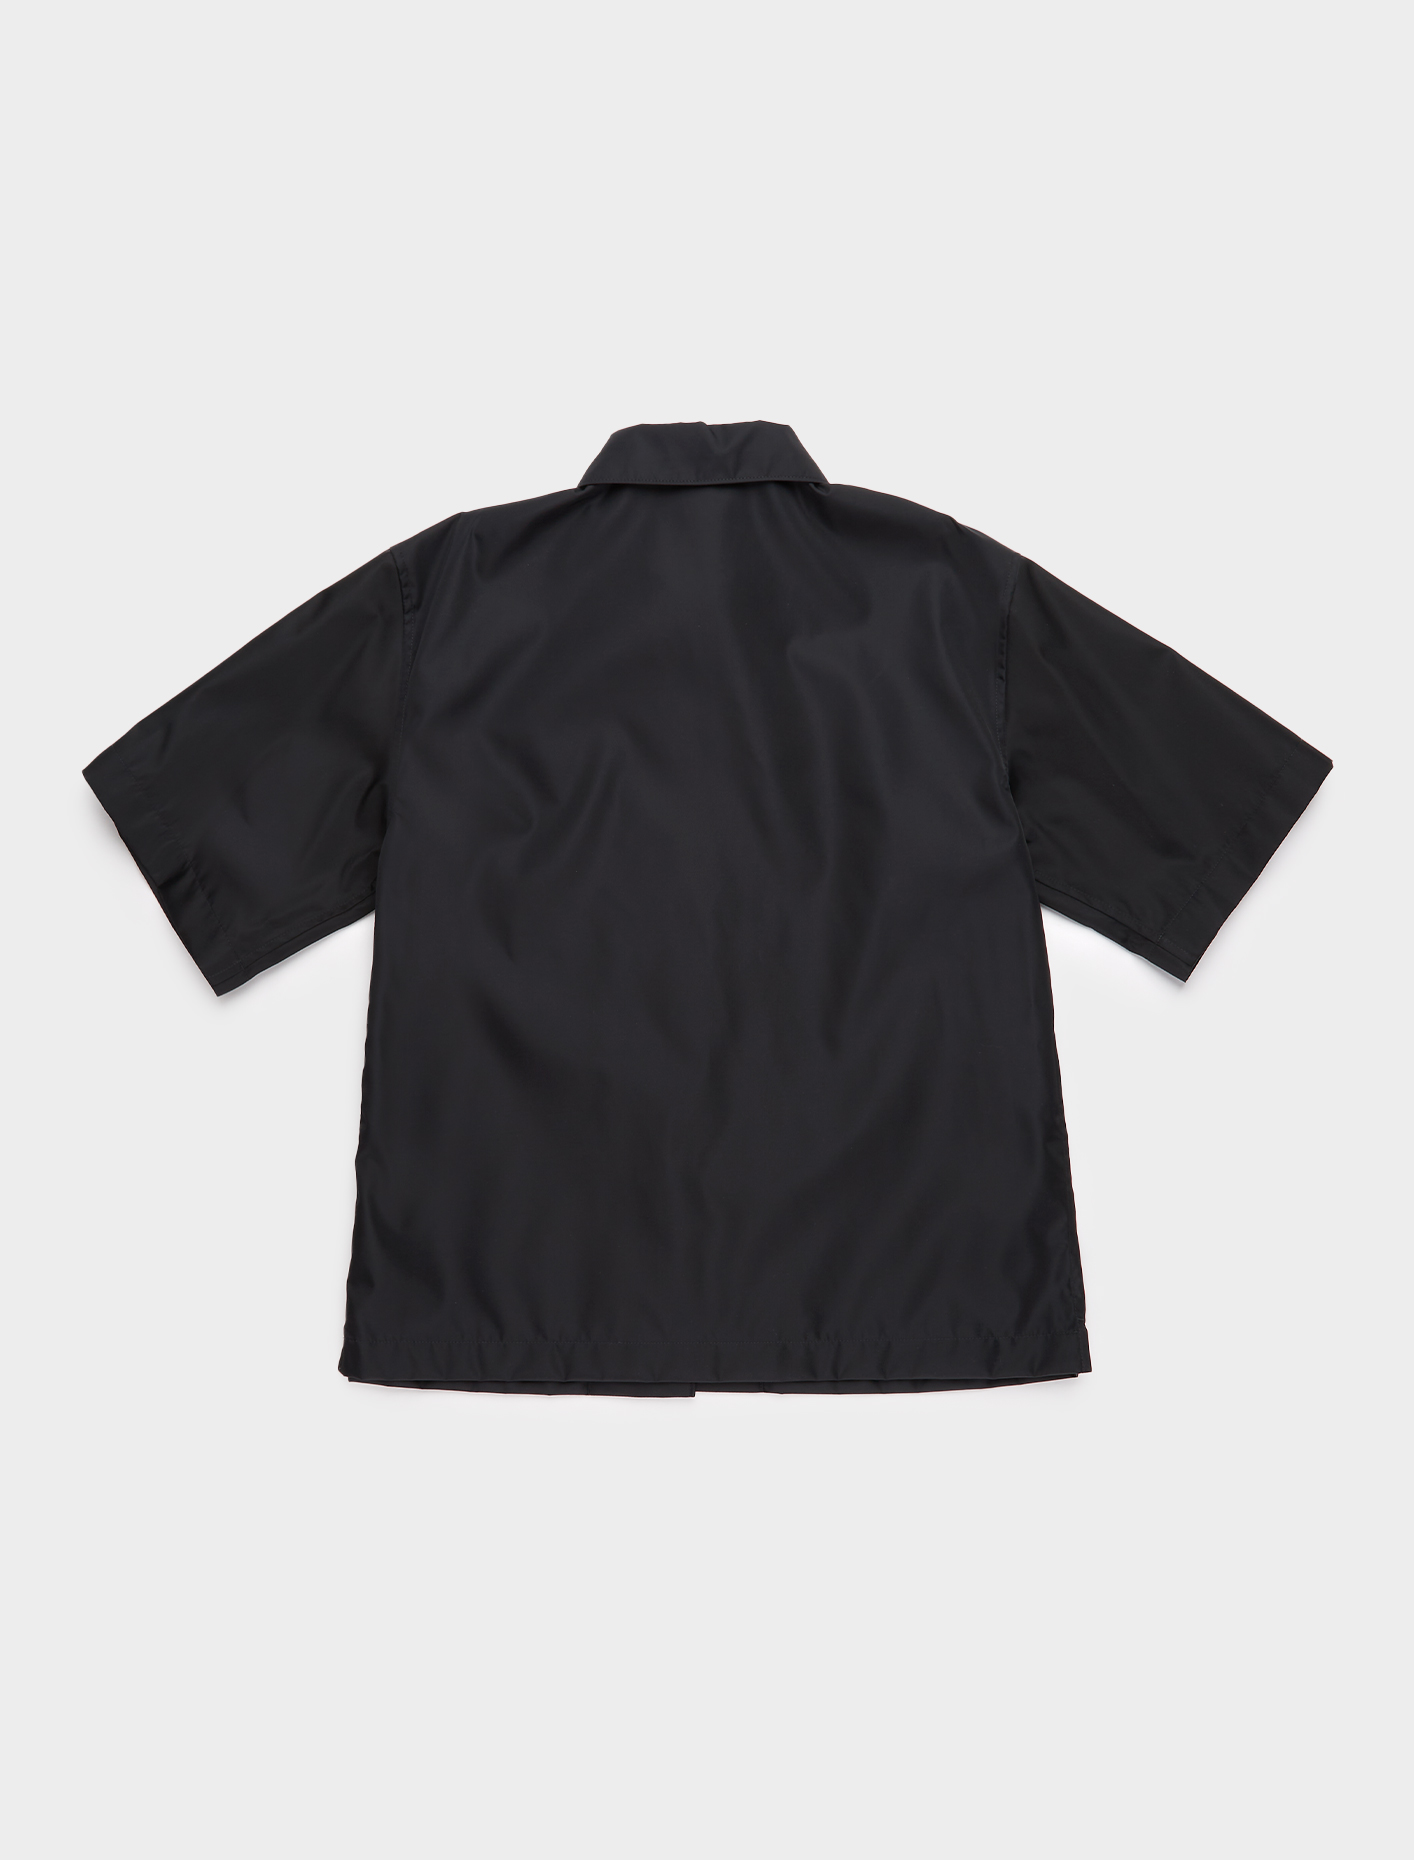 Prada Re-Nylon Shirt in Black | Voo Store Berlin | Worldwide Shipping